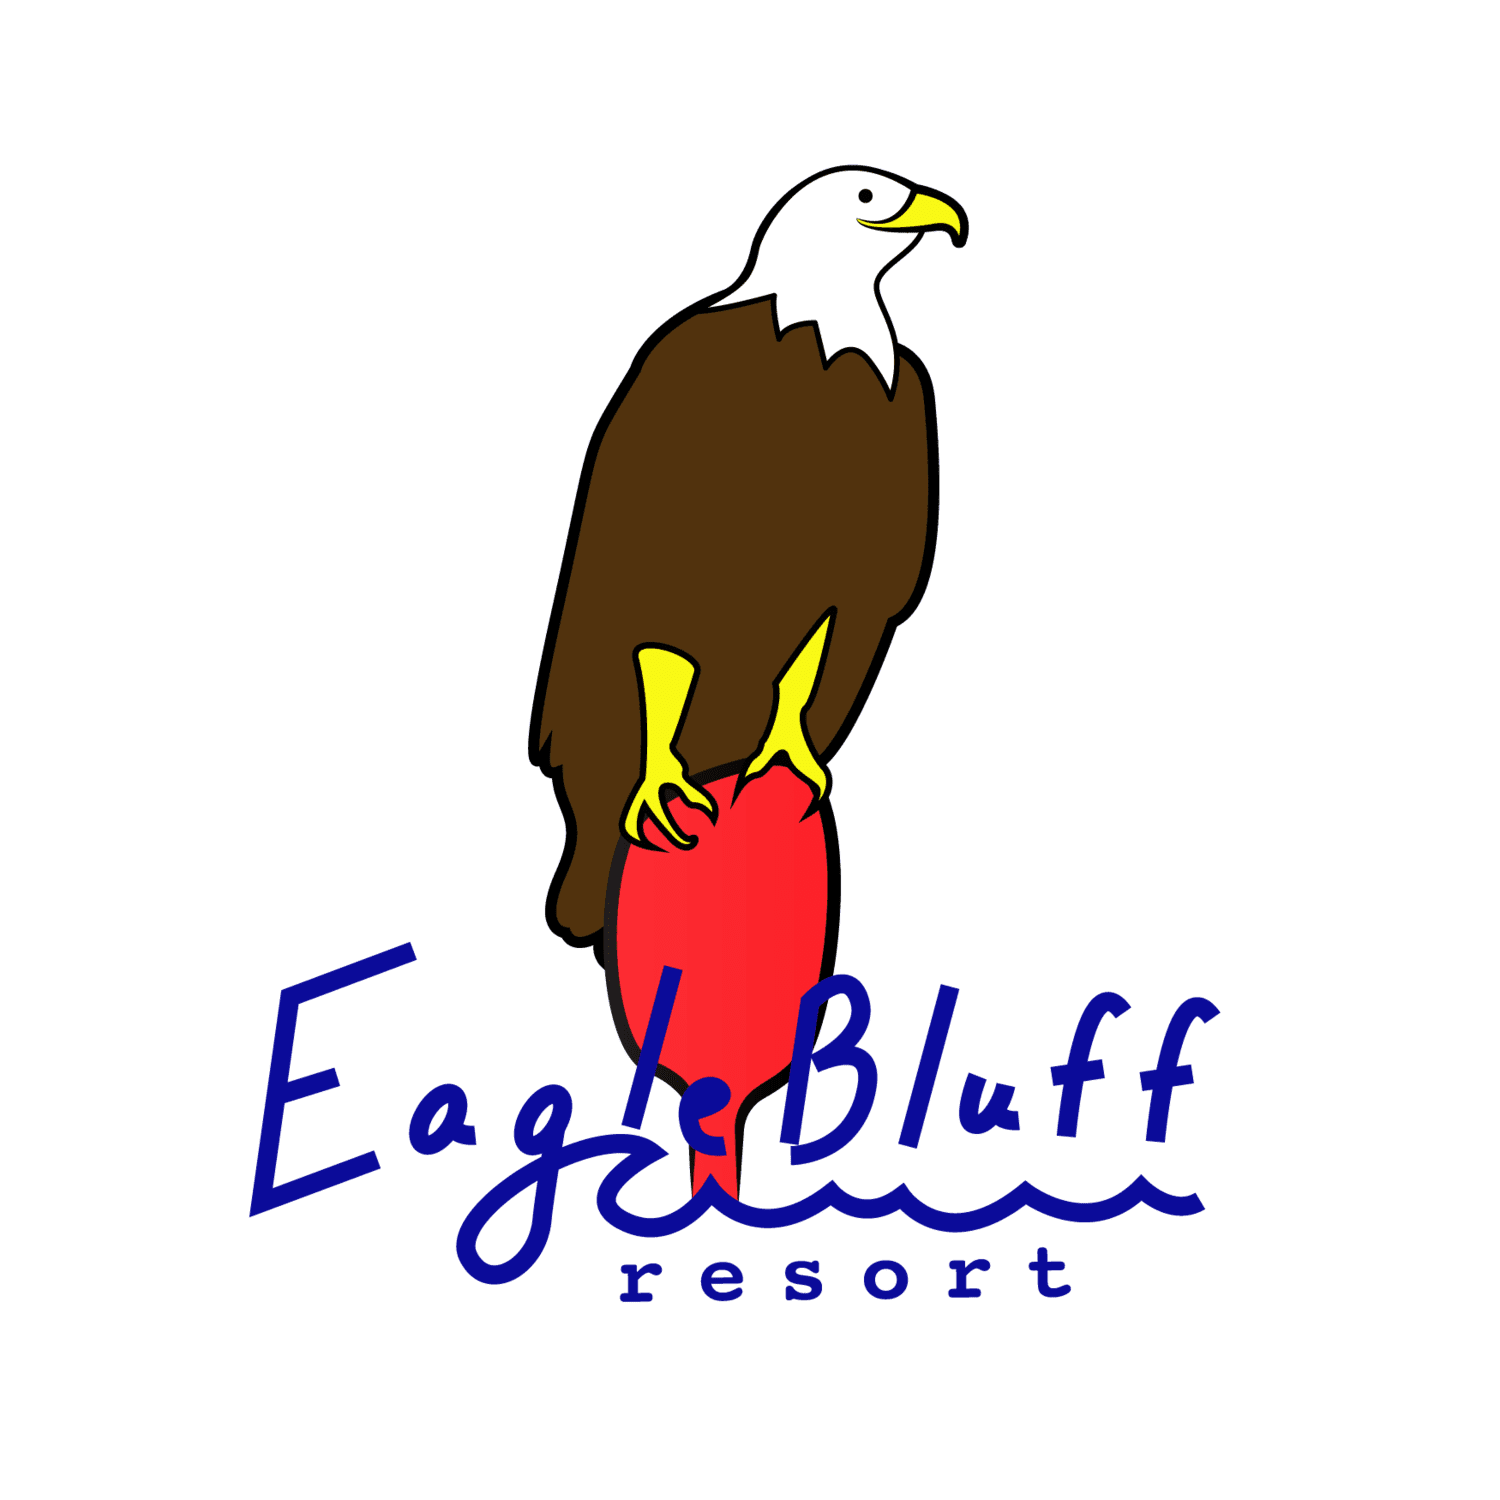 Eagle Bluff Resort